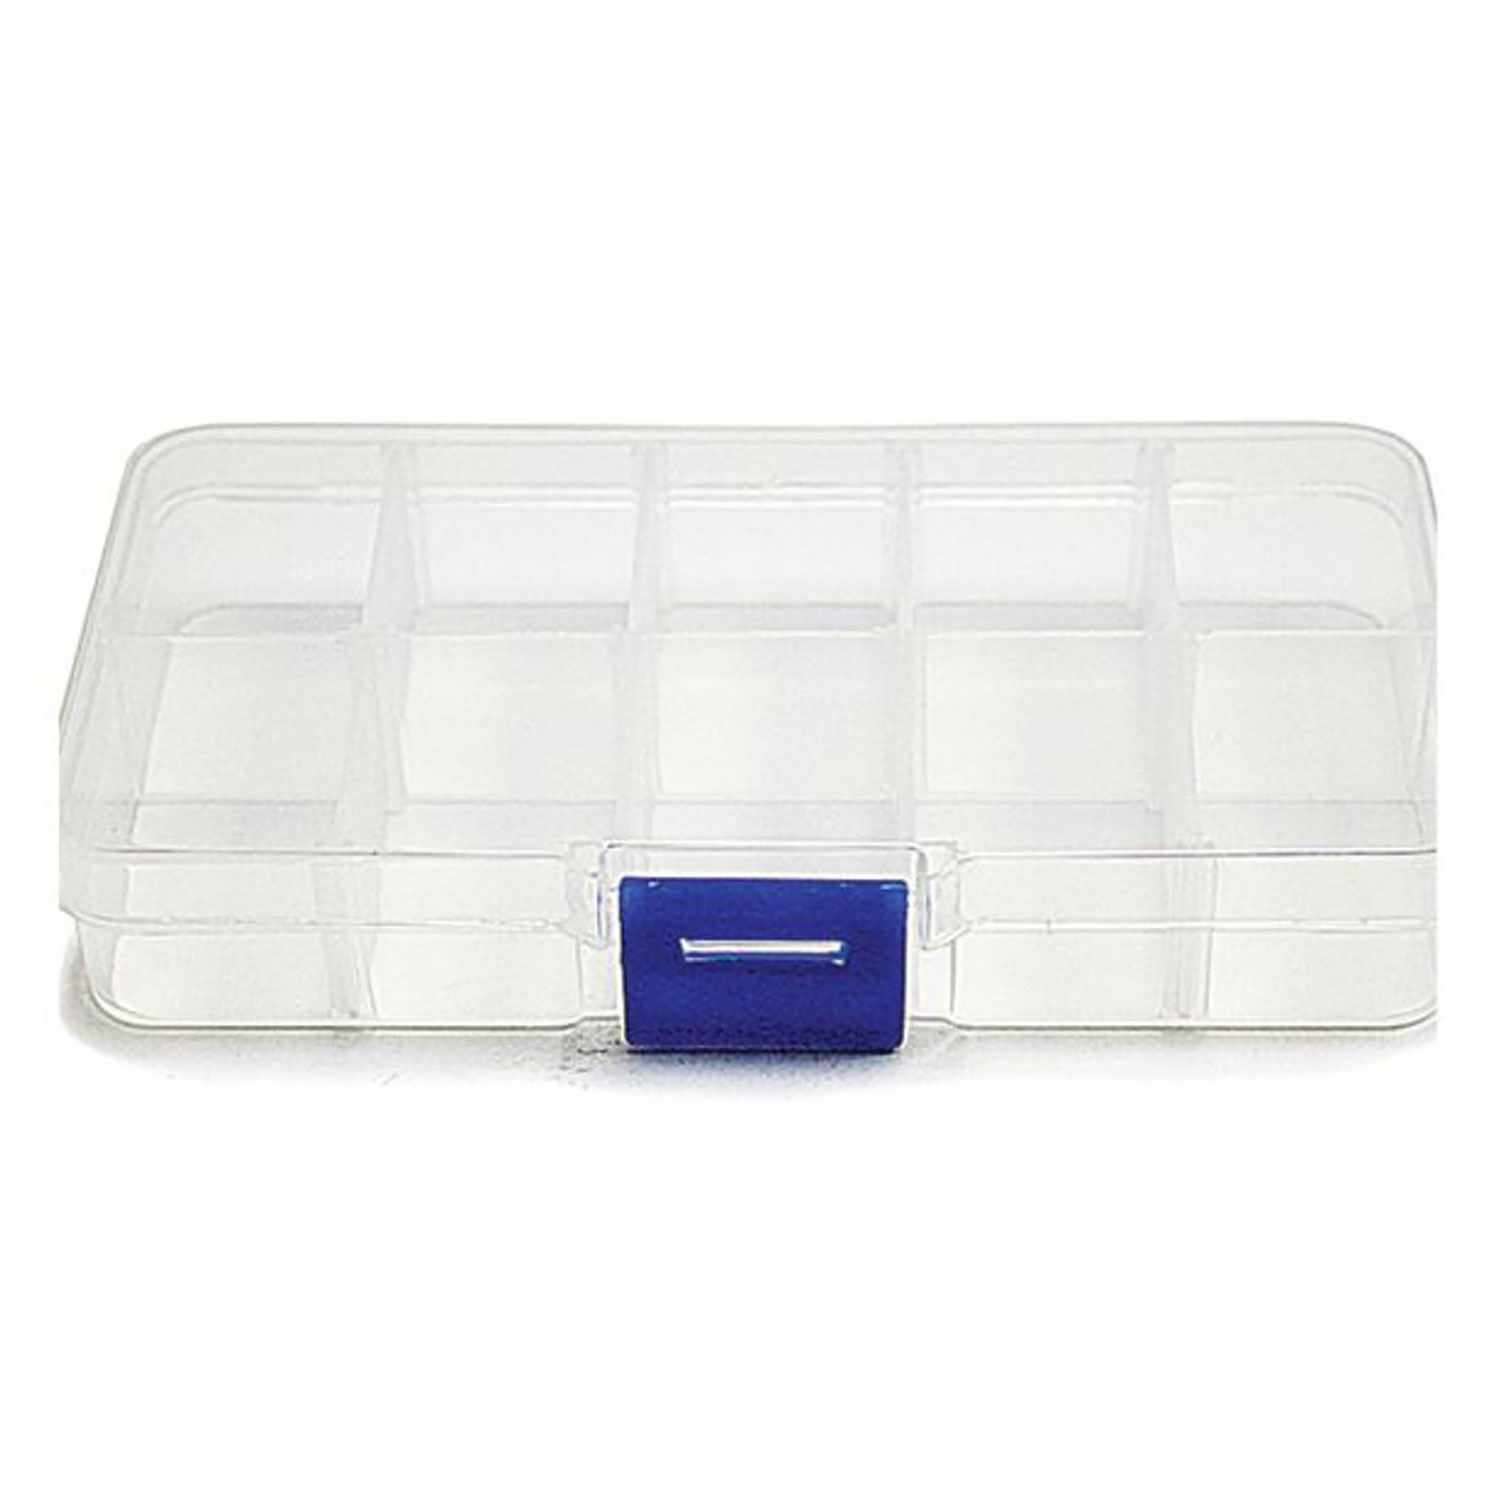 10 Slot Mini Plastic Organizer Box